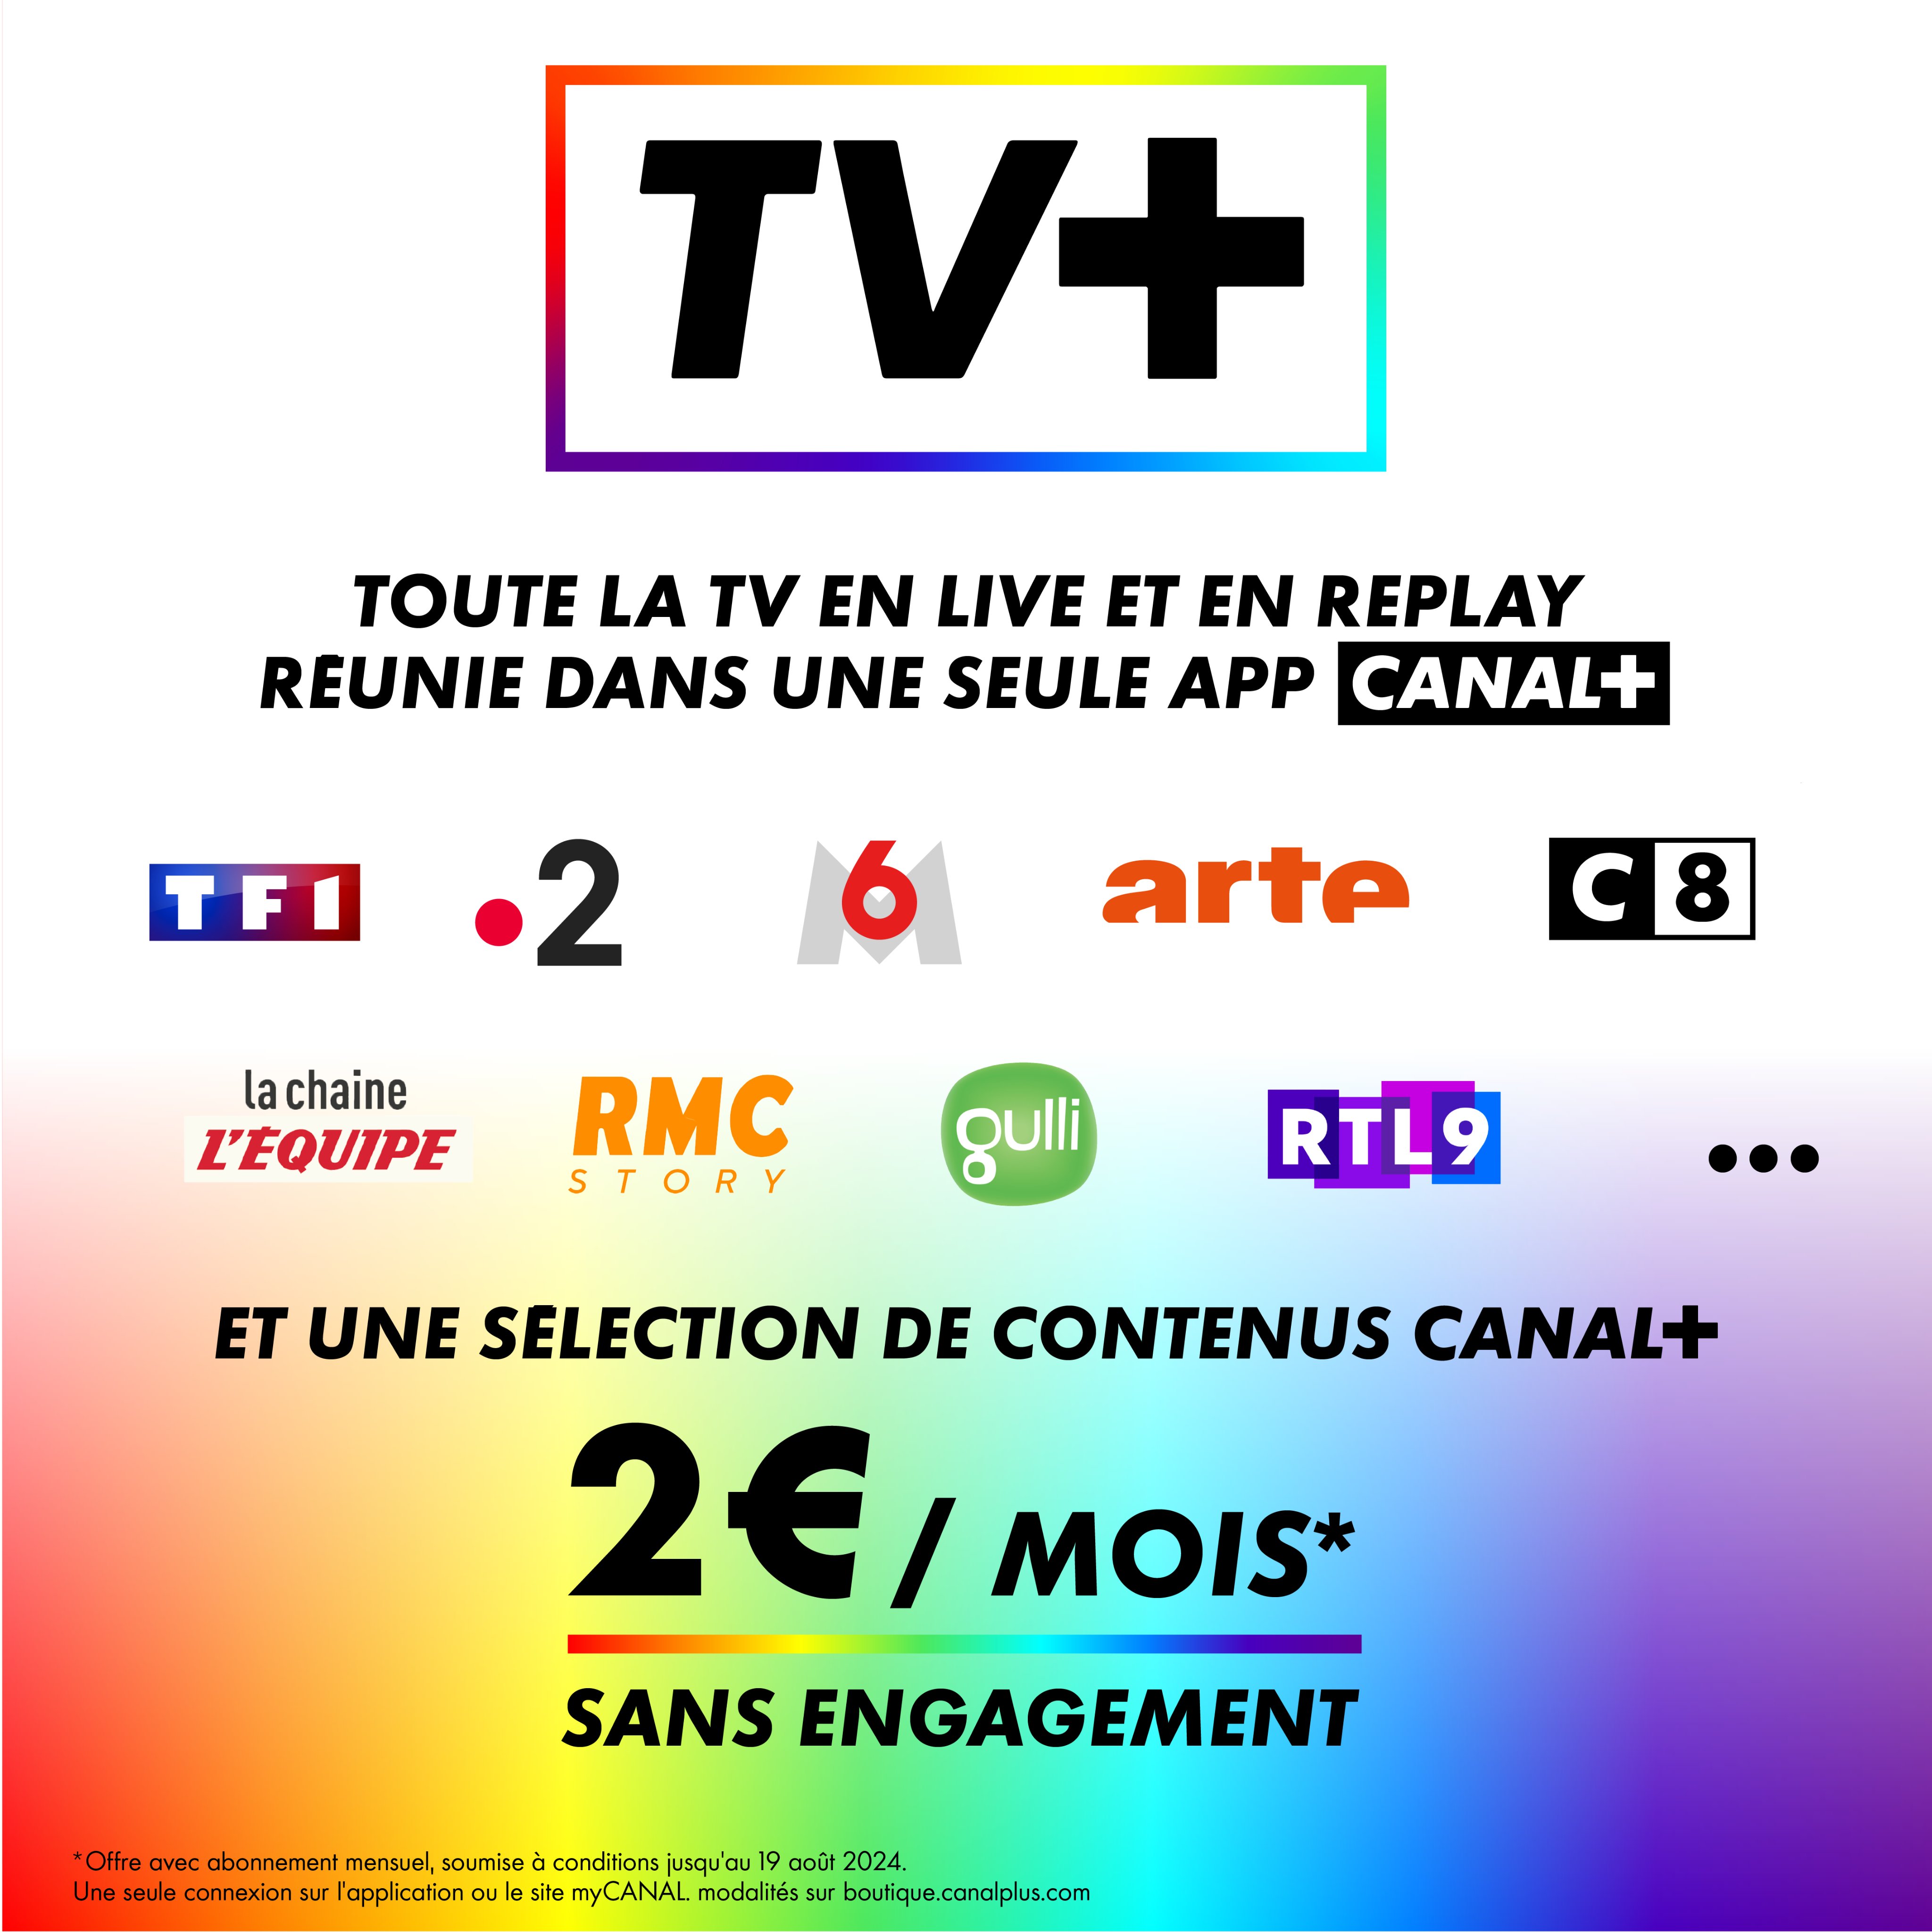 TV+ : Canal+ lance sa nouvelle offre de streaming